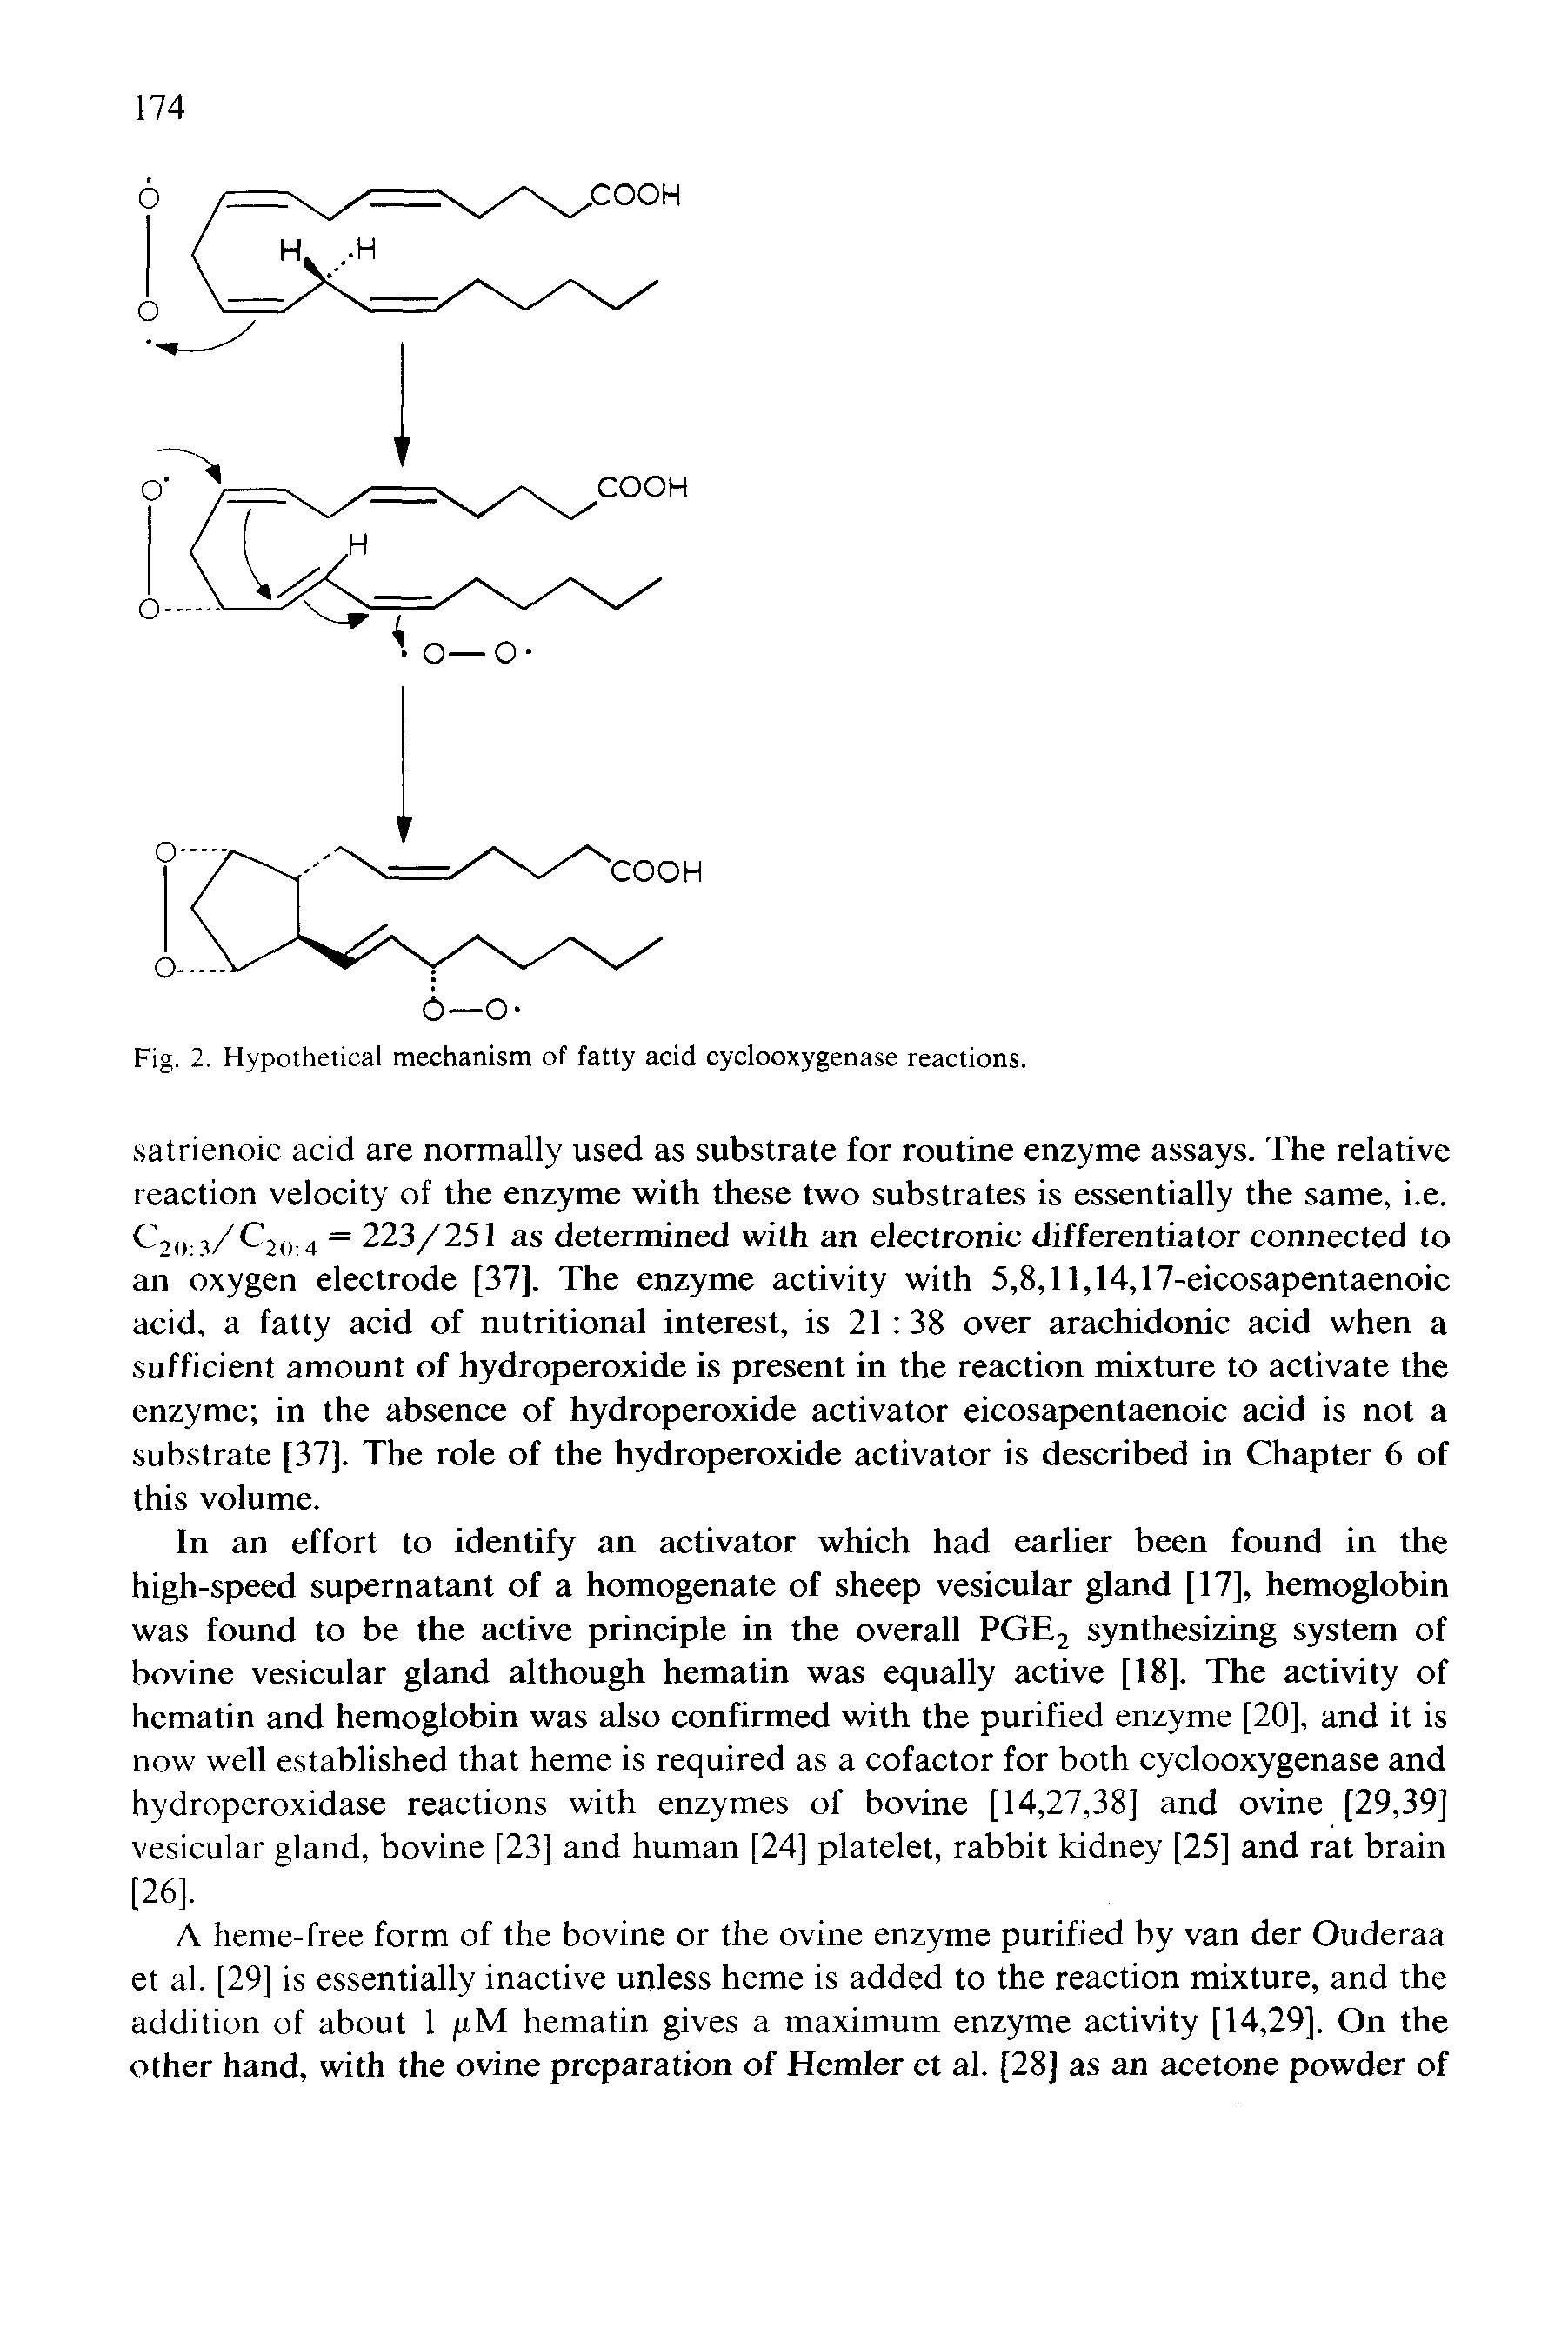 Fig. 2. Hypothetical mechanism of fatty acid cyclooxygenase reactions.